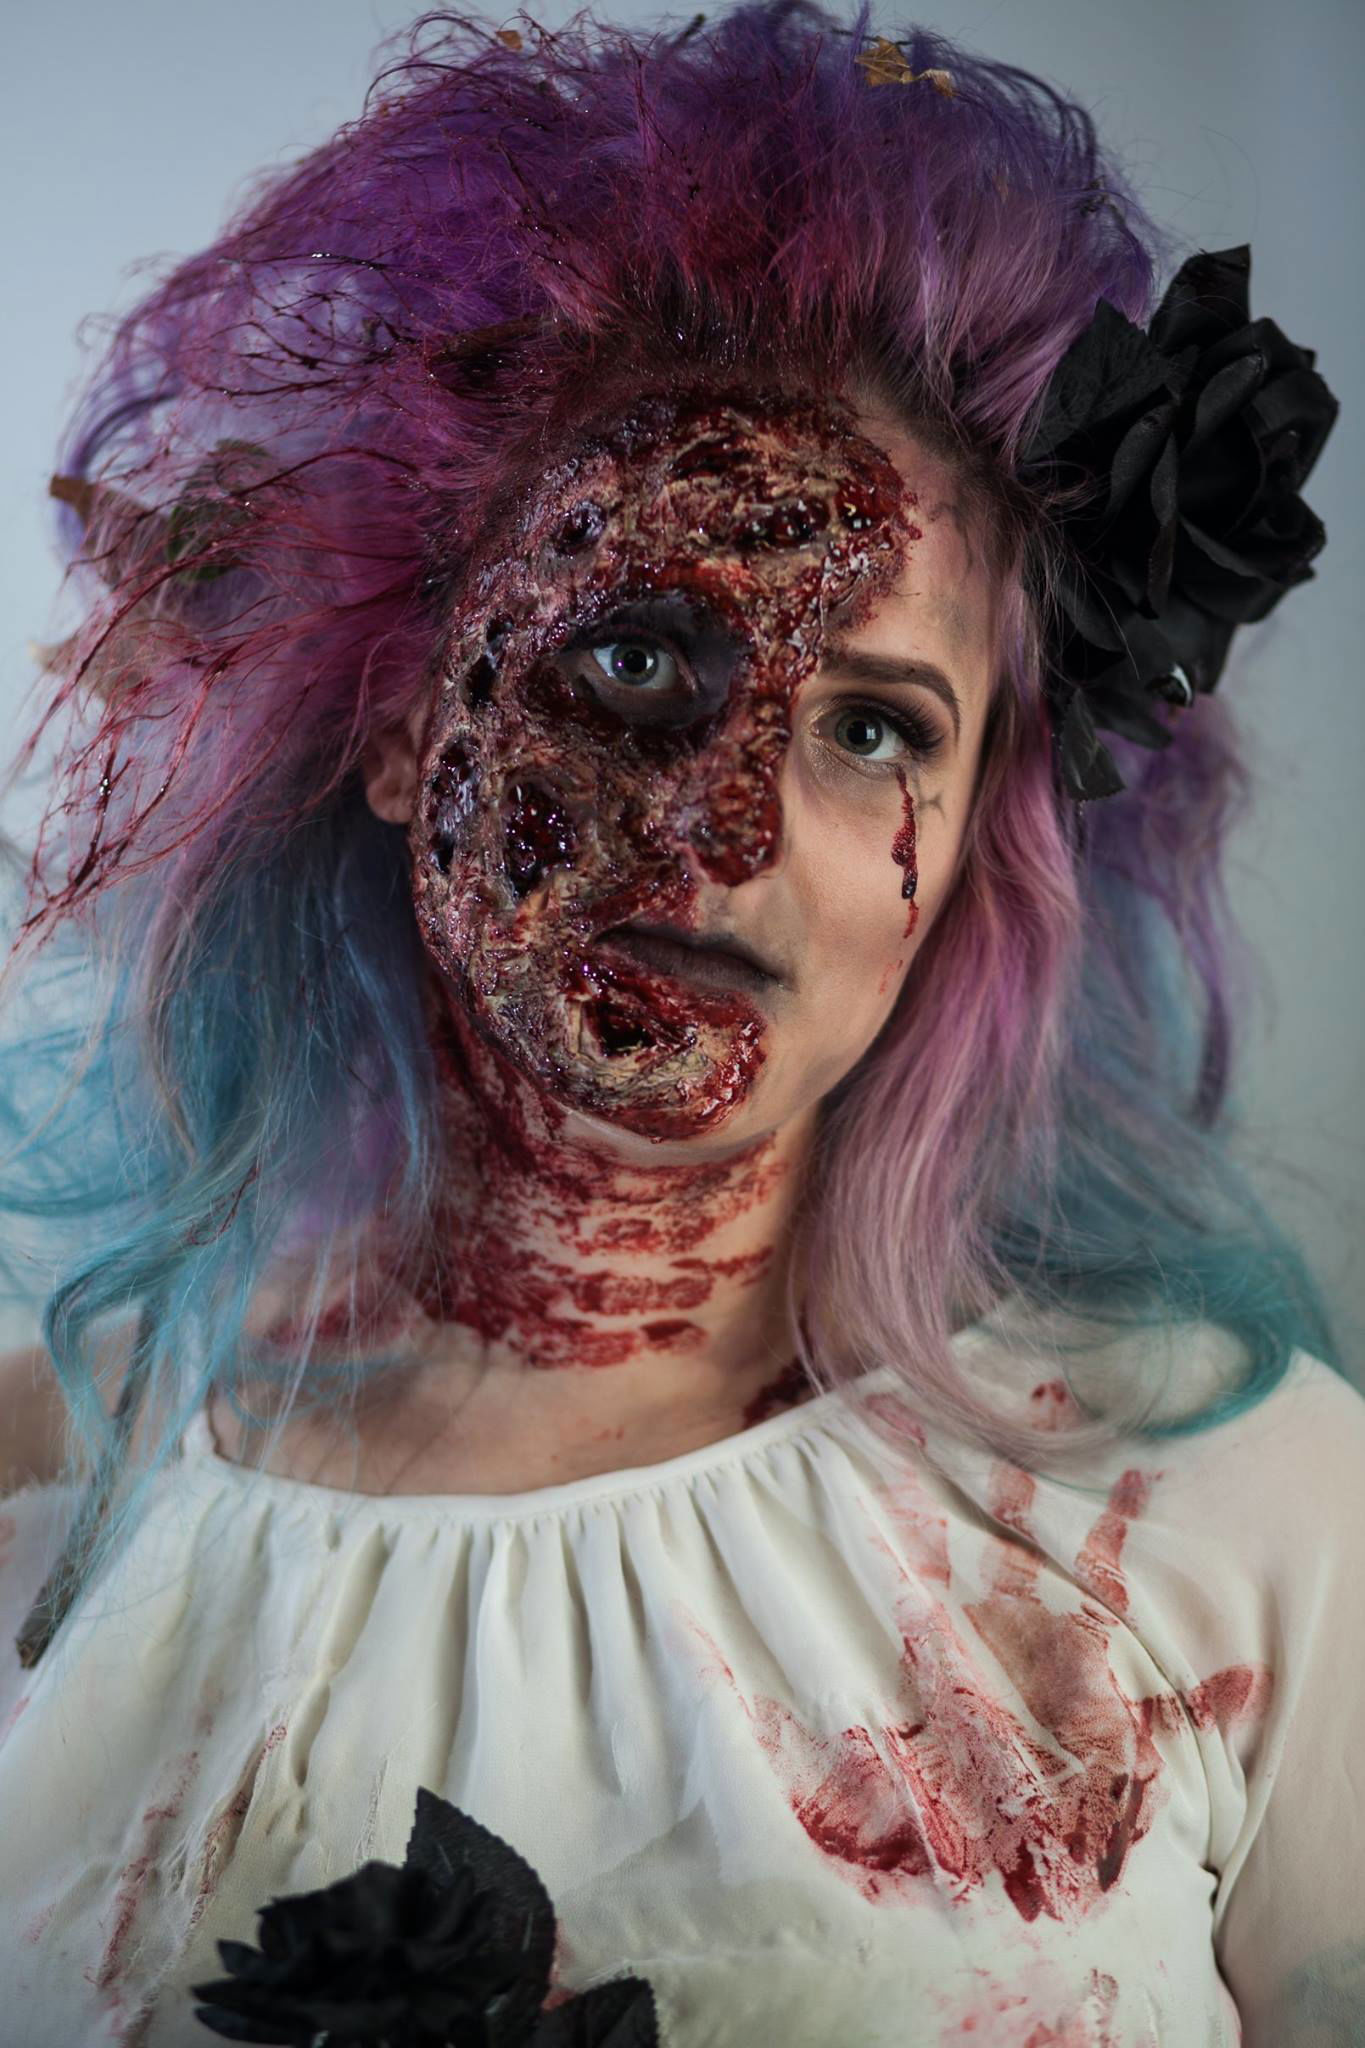 Close-up of zombie bride Halloween makeup